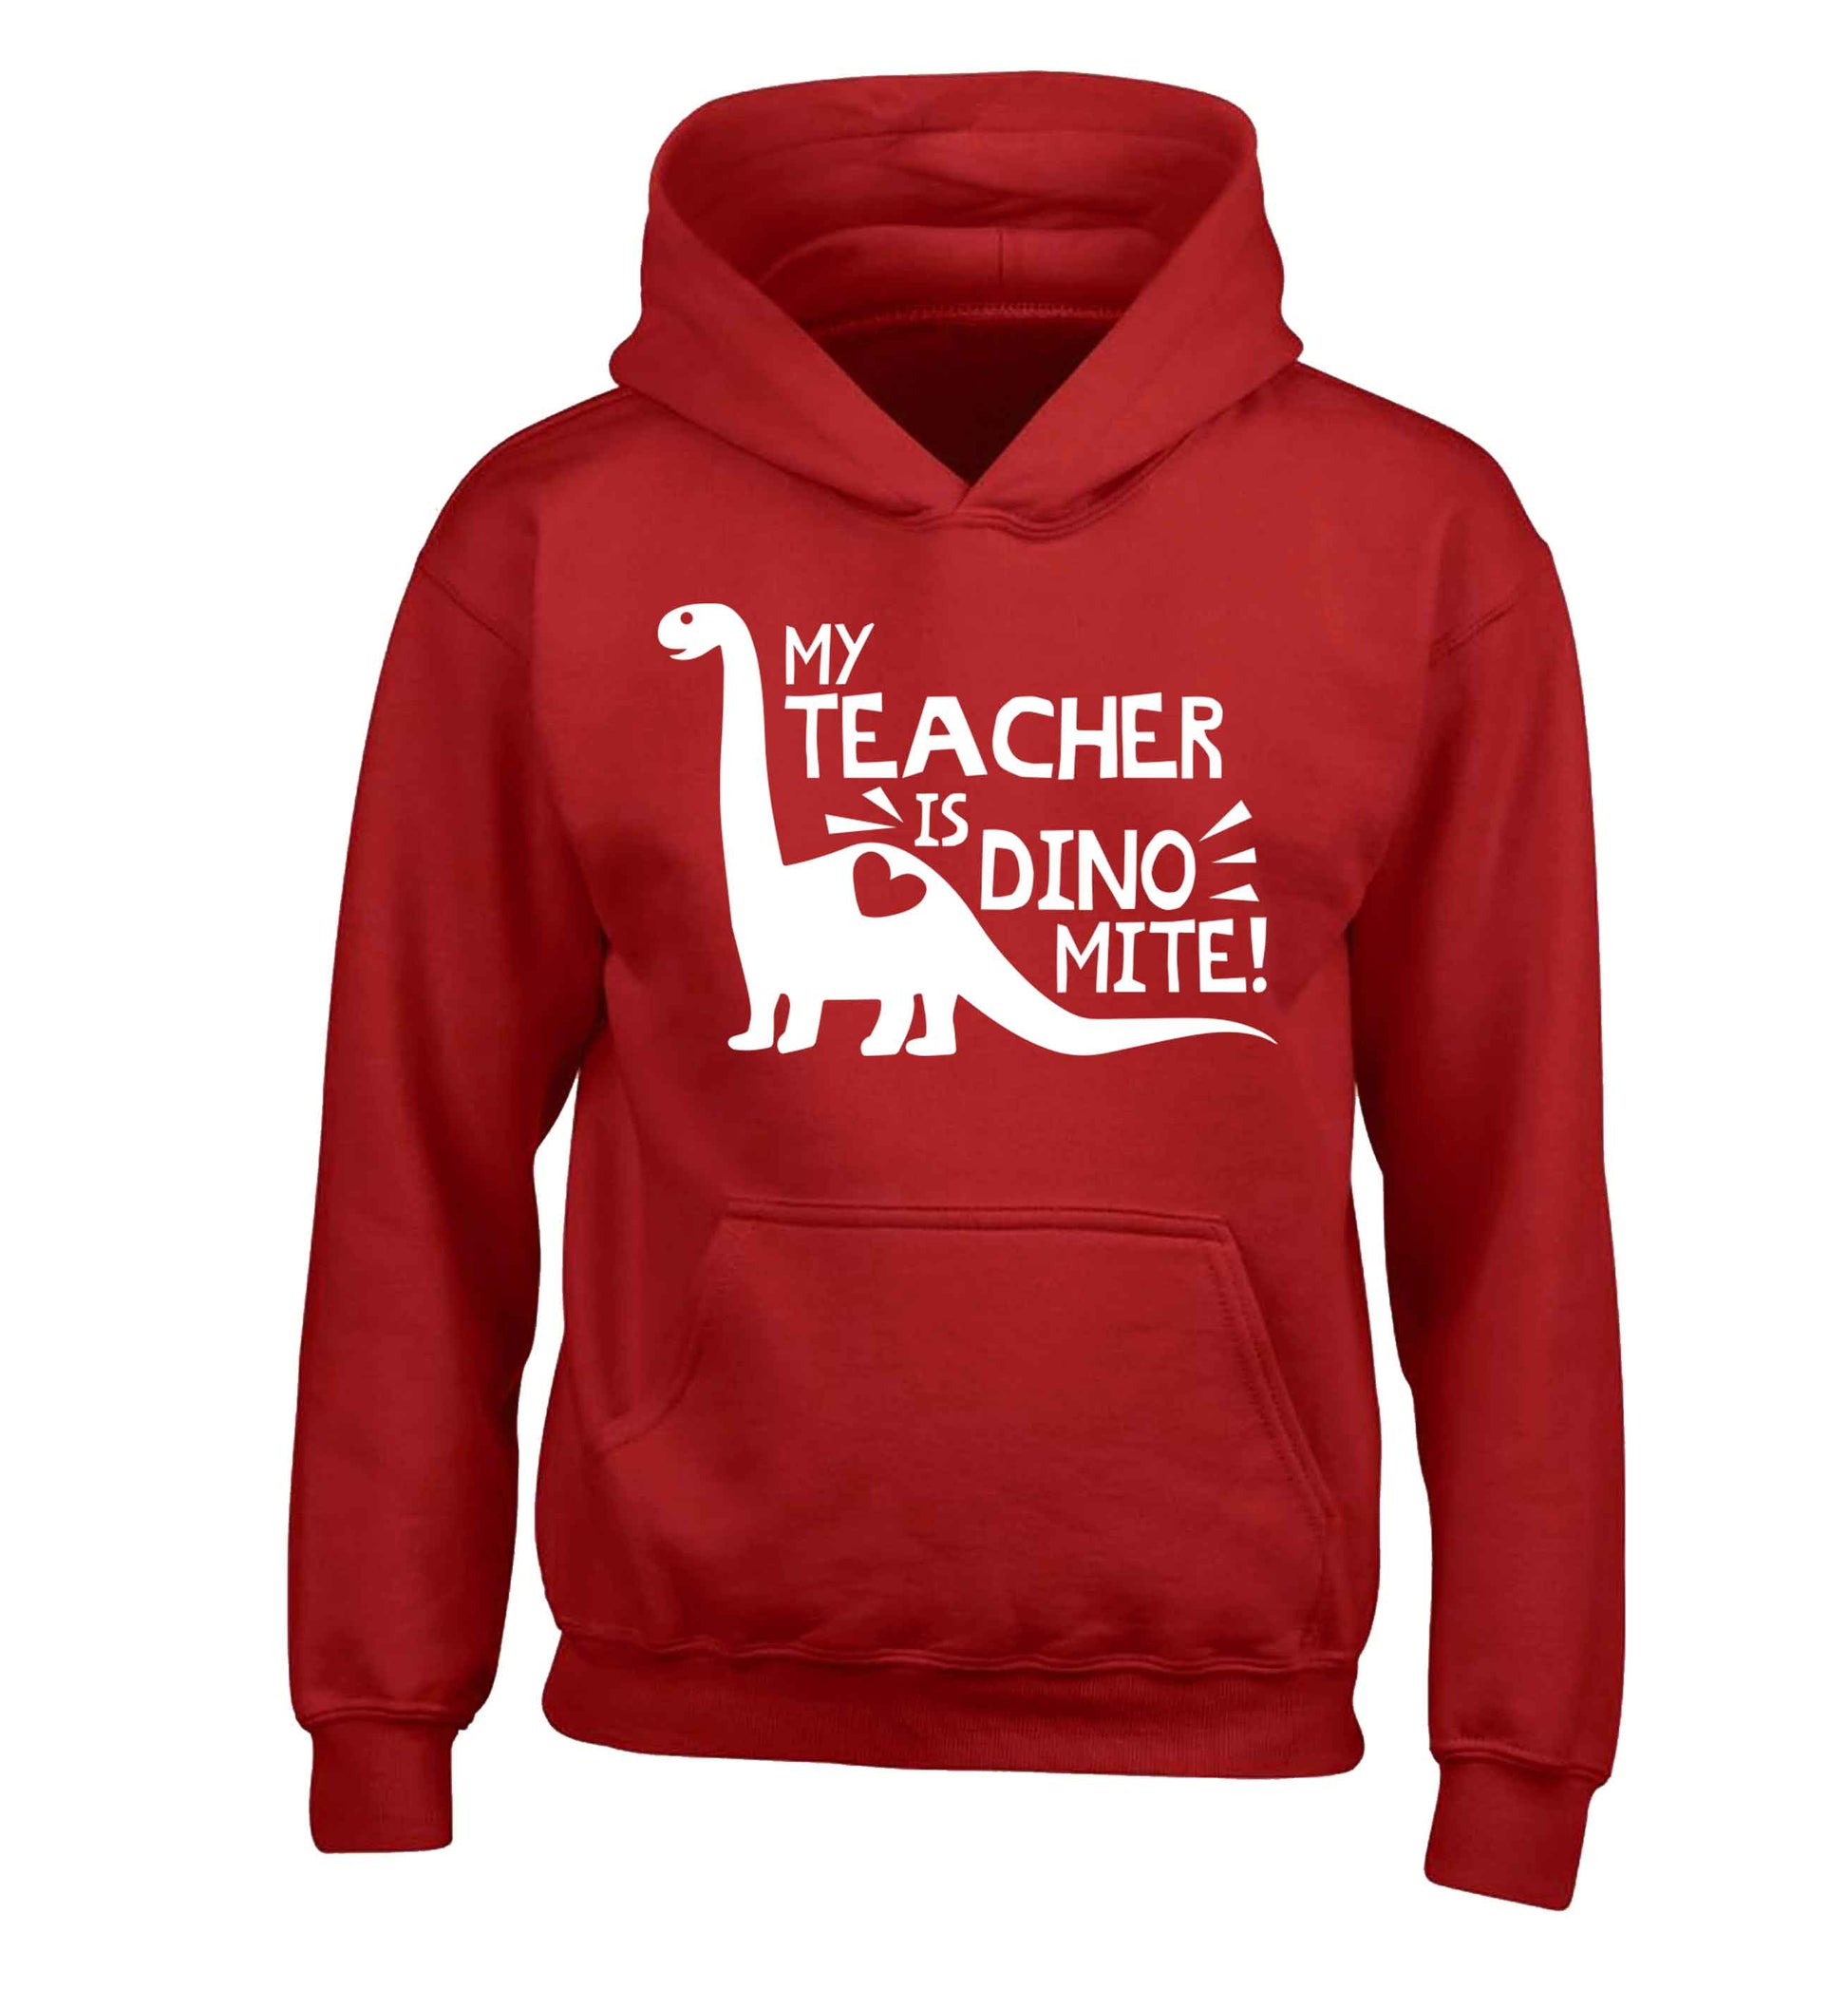 My teacher is dinomite! children's red hoodie 12-13 Years